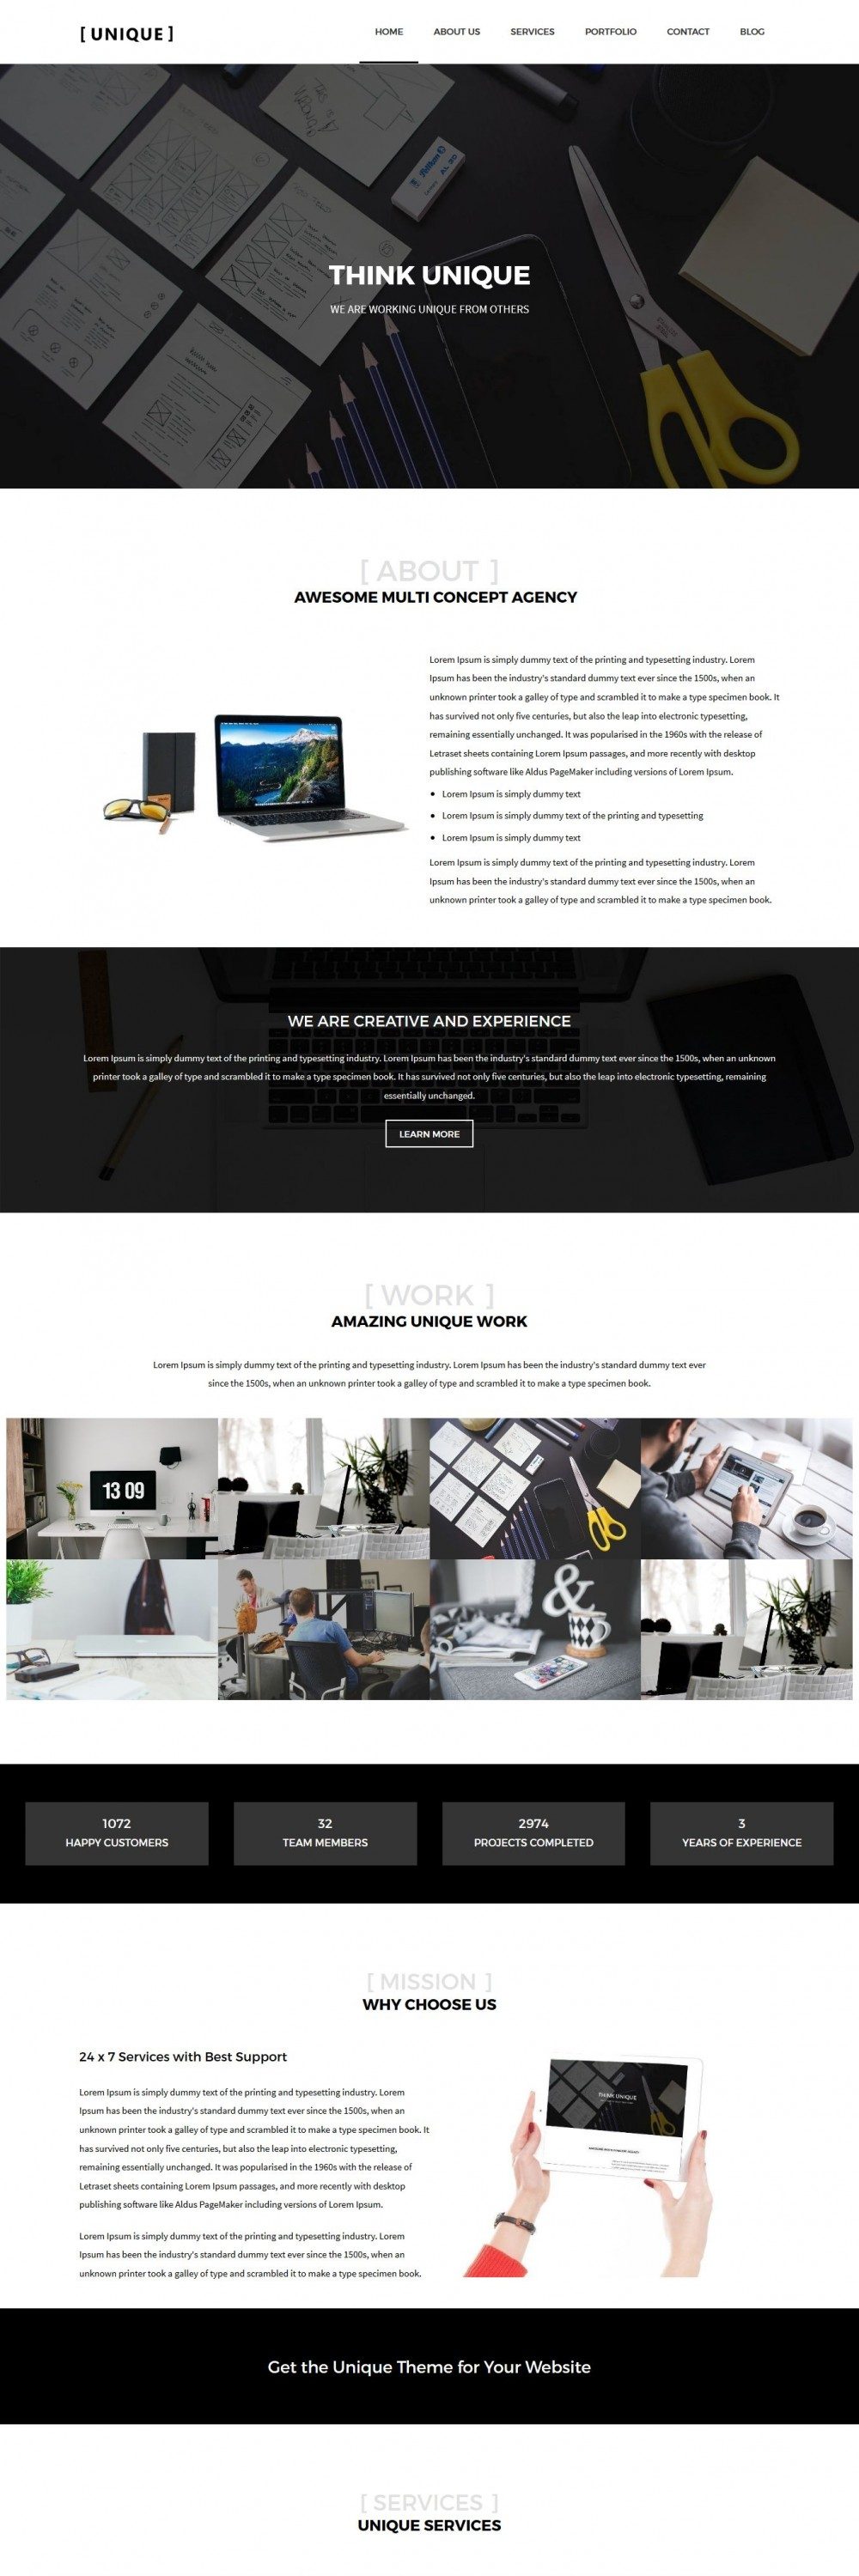 Unique - Joomla Template for Web Design Agency